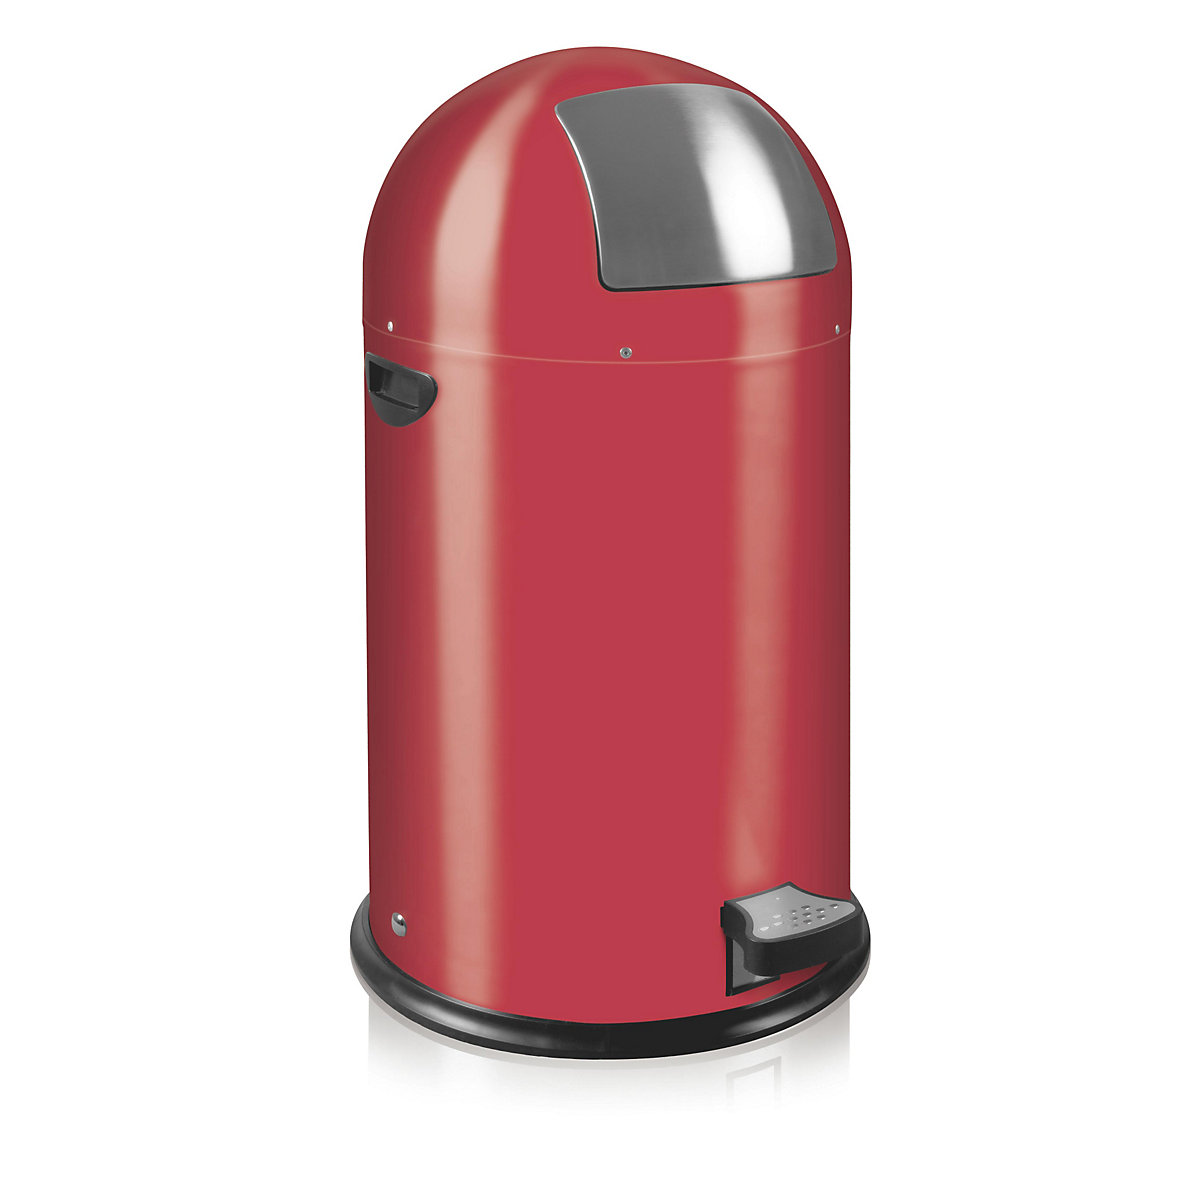 Coș de gunoi cu capac rabatabil și pedală, volum 33 l, î. x Ø 700 x 350 mm, roșu